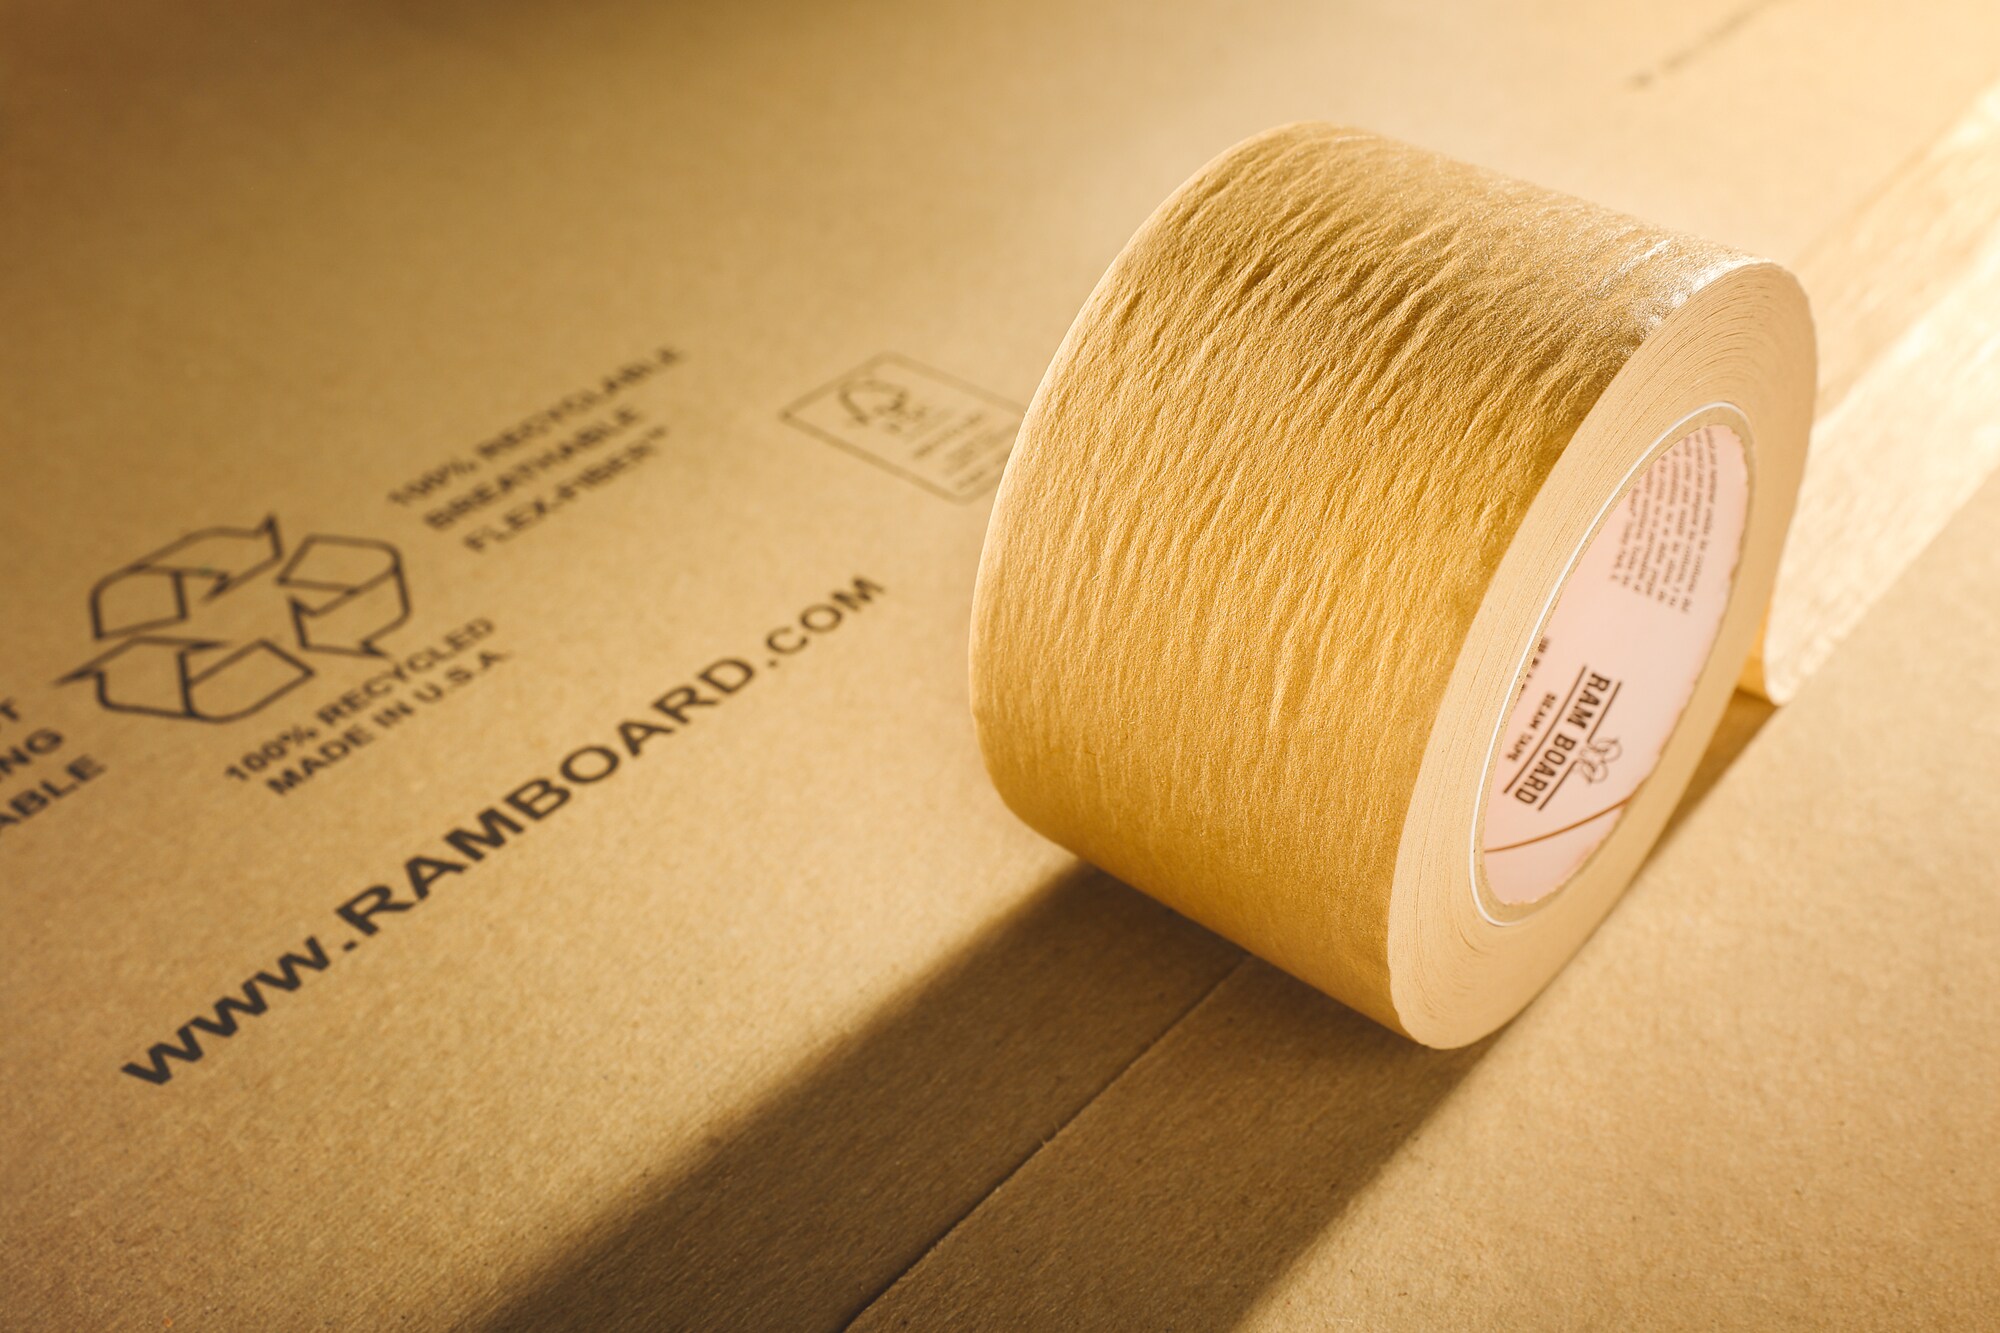 Ramshackel trades grip tape for hemp skateboard carpet